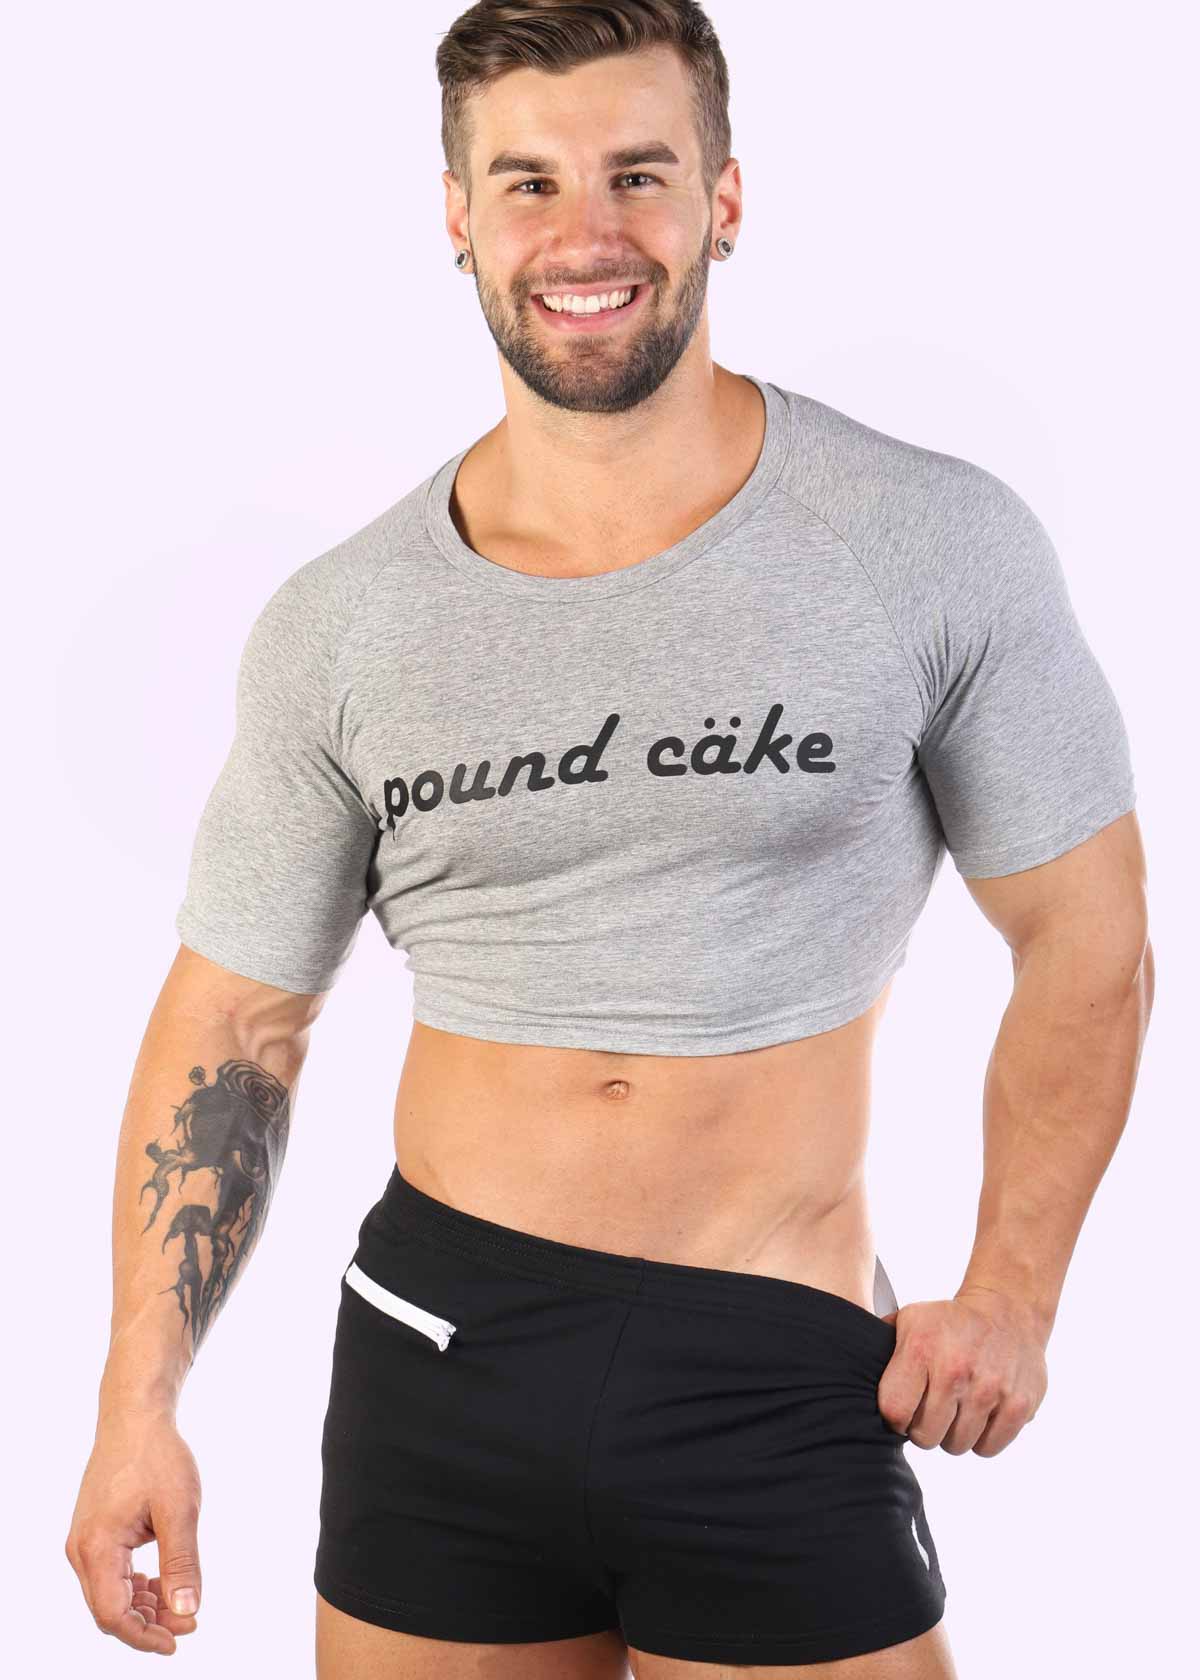 JJ Malibu Pound Cake Men's Crop Top T-shirt